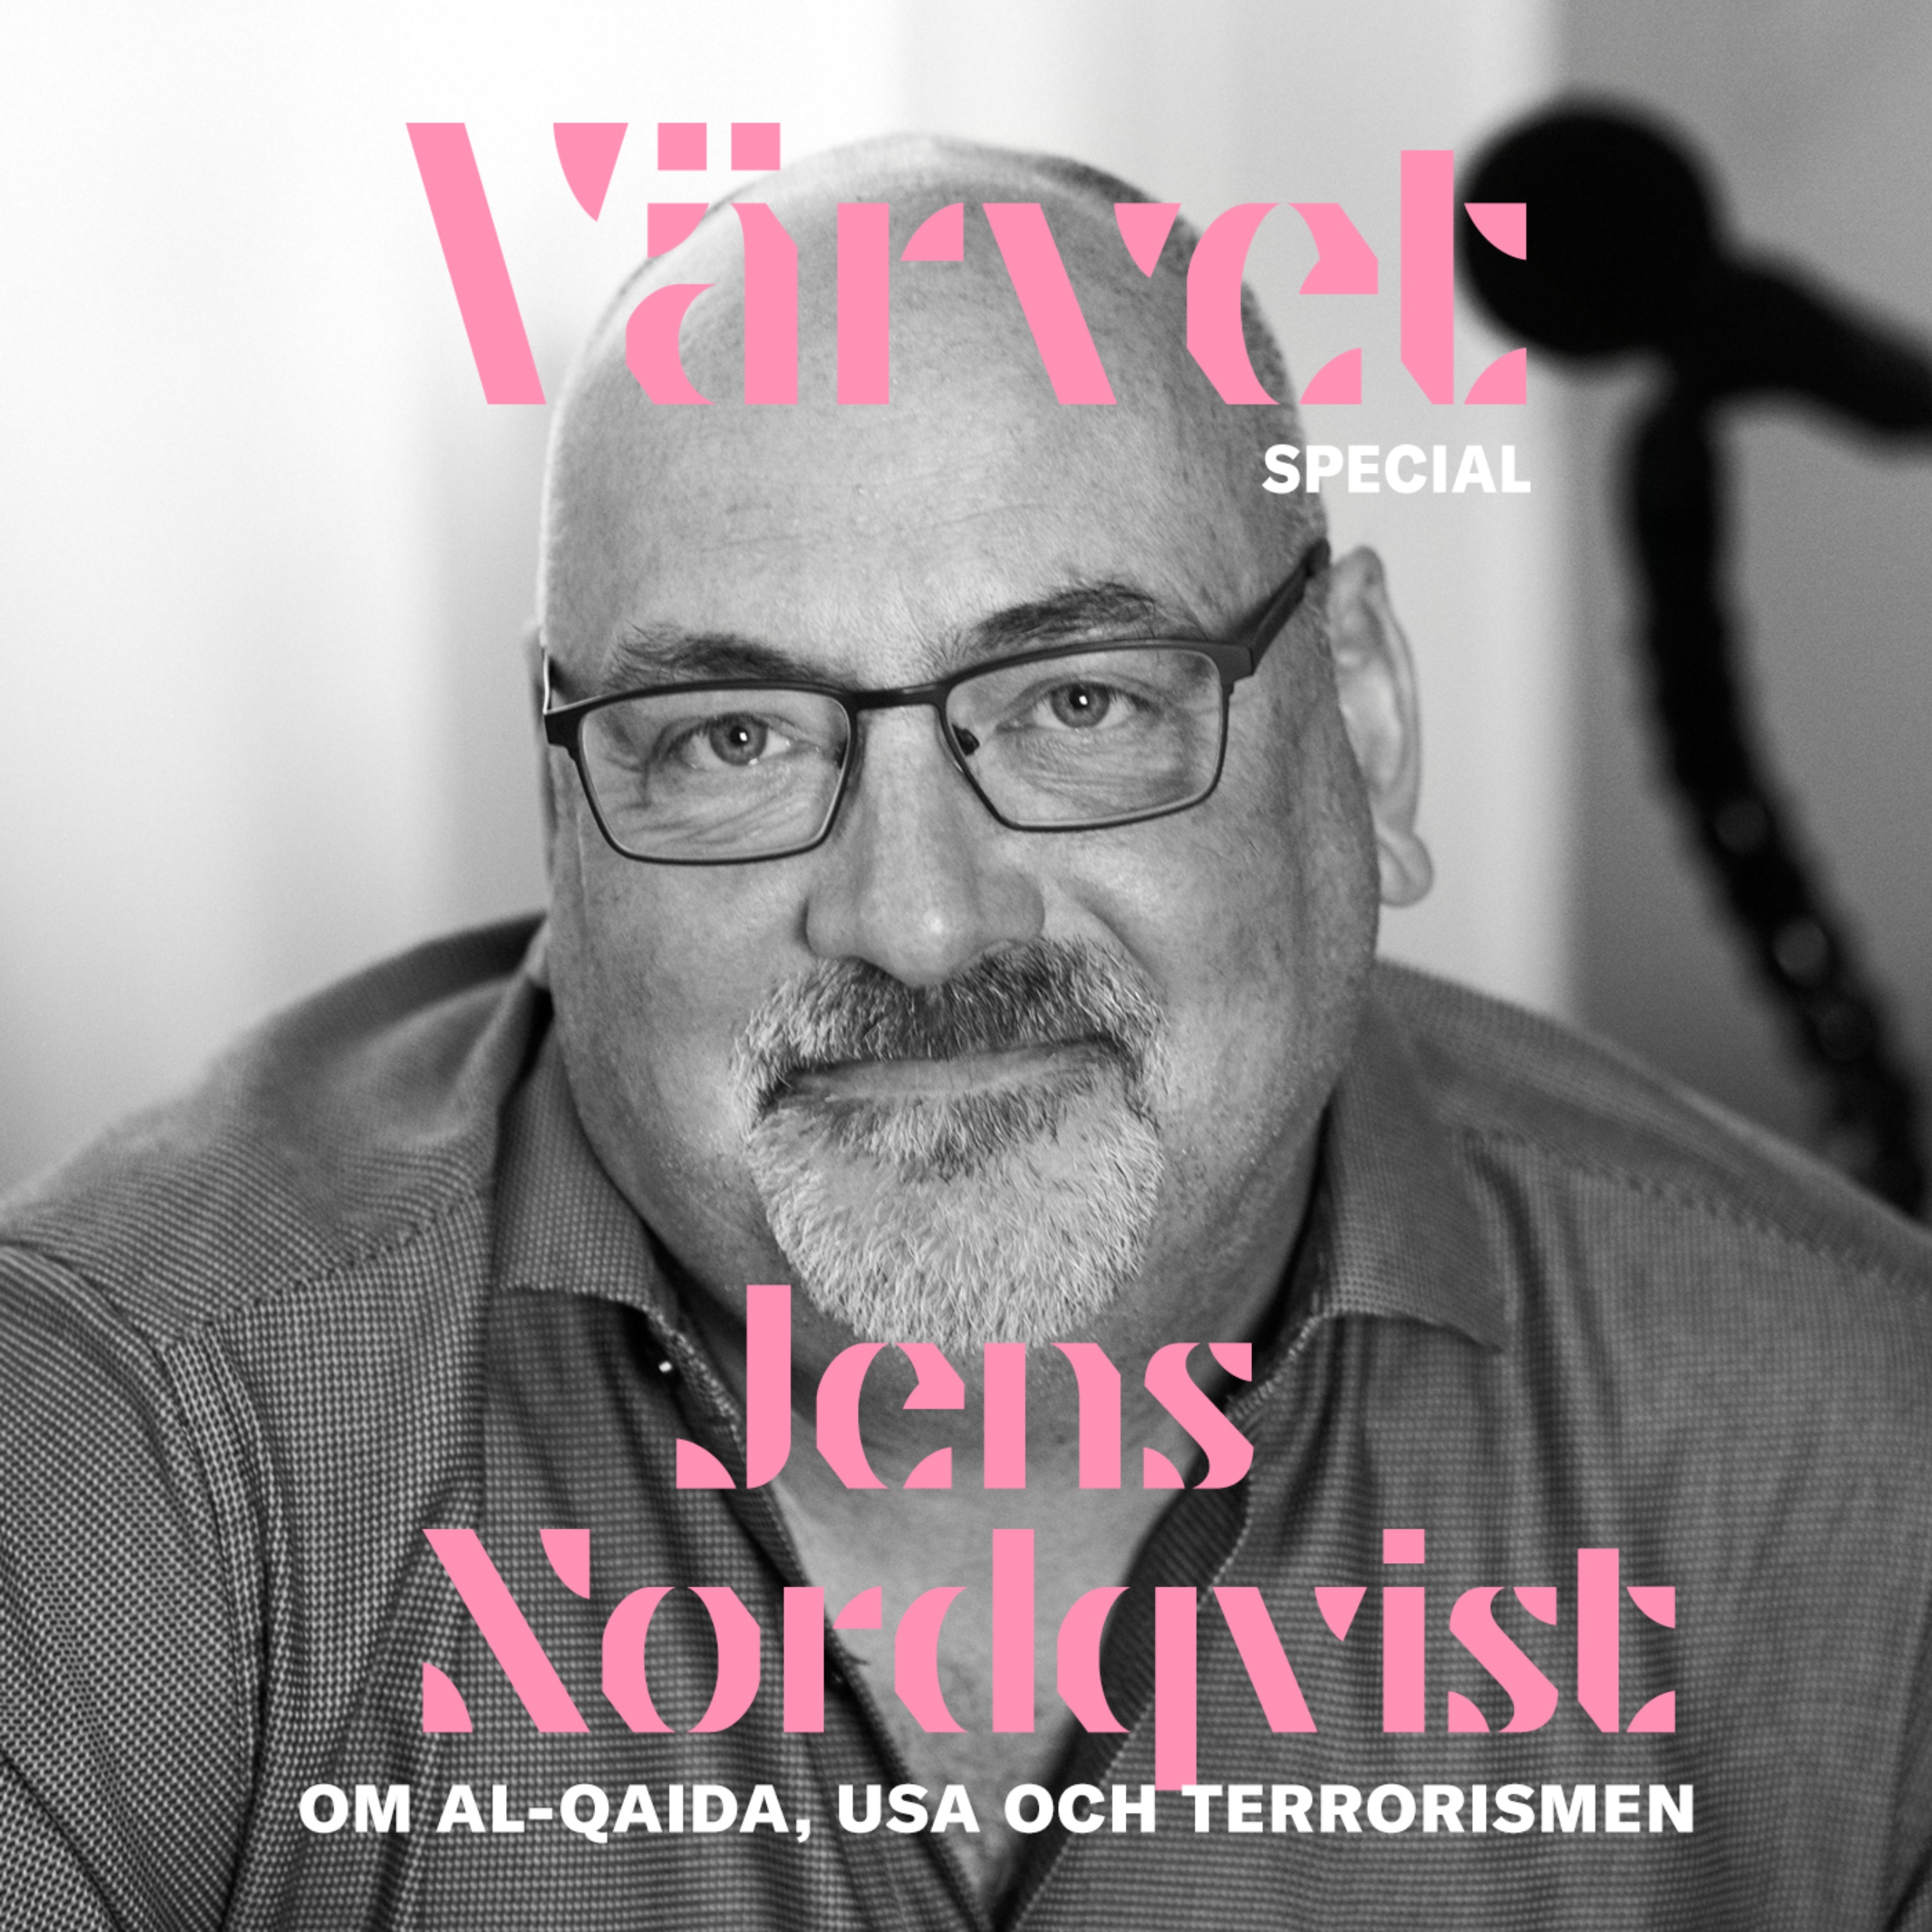 SPECIAL: Jens Nordqvist